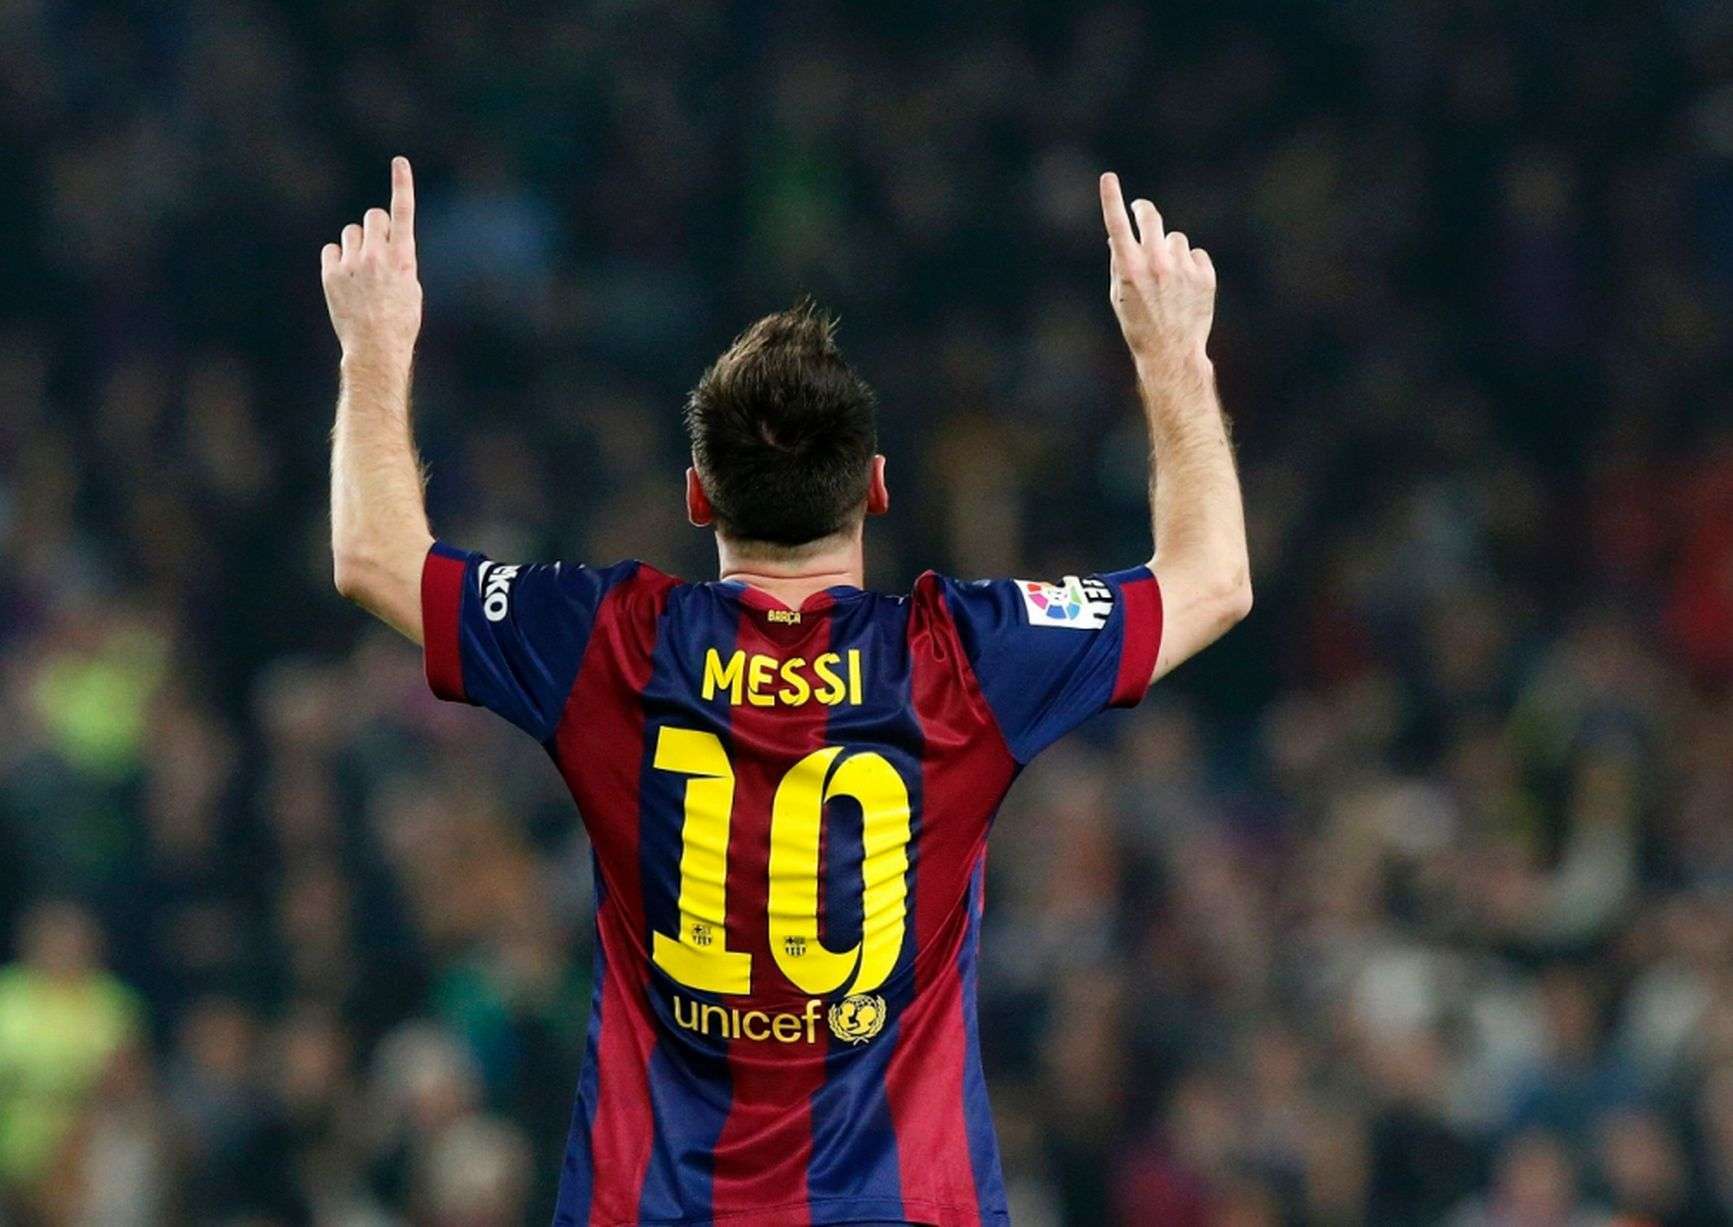 Amazing Lionel Messi Image HD Wallpaper. Beautiful image HD